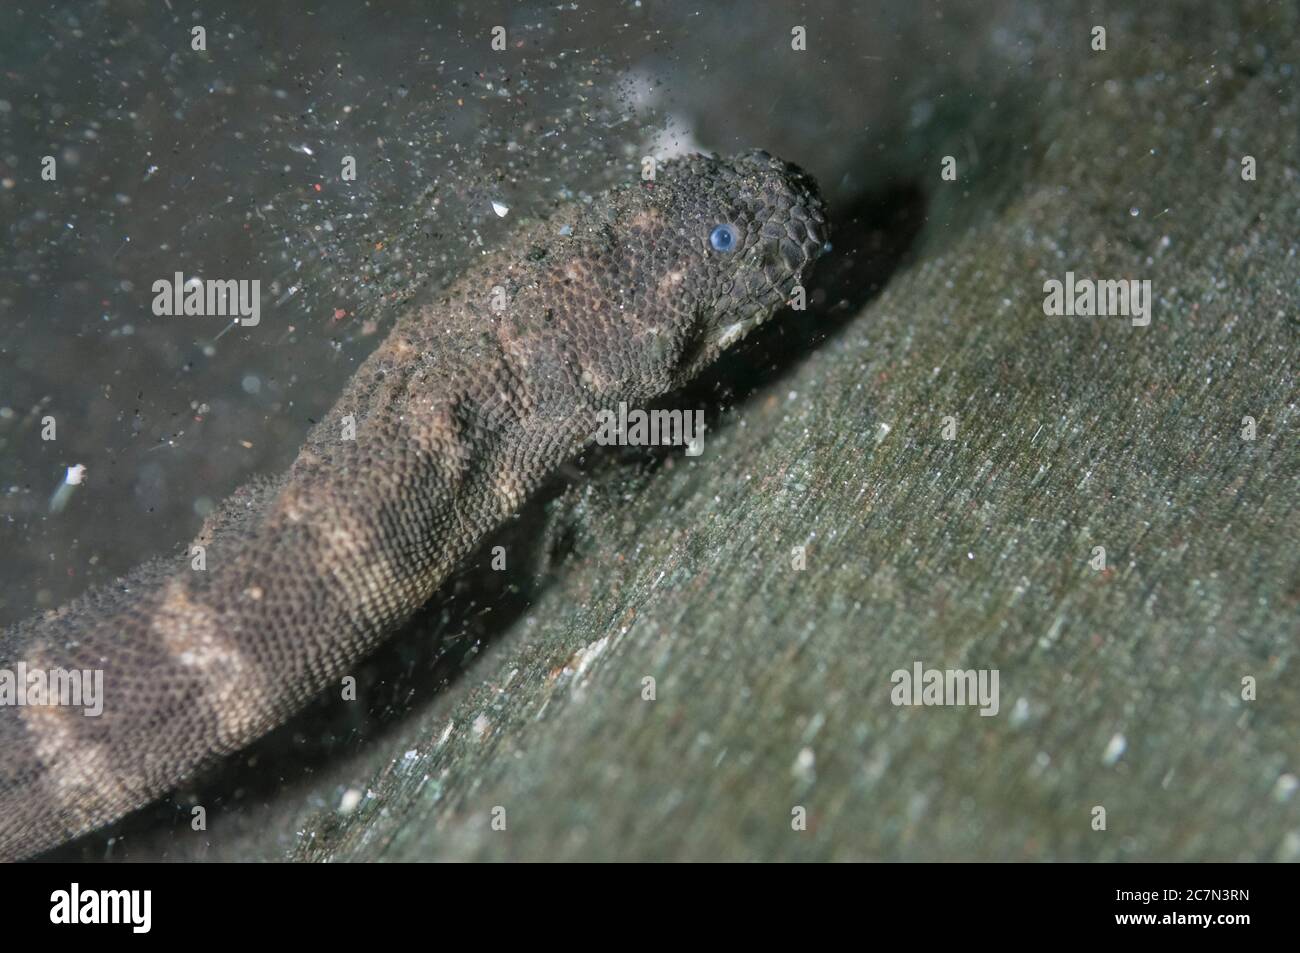 Marine file Snake, Acrochordus granulatus, su sabbia nera, immersione notturna, sito di immersione Betlemme, Poopoh, Manado, Sulawesi, Indonesia, Oceano Pacifico Foto Stock